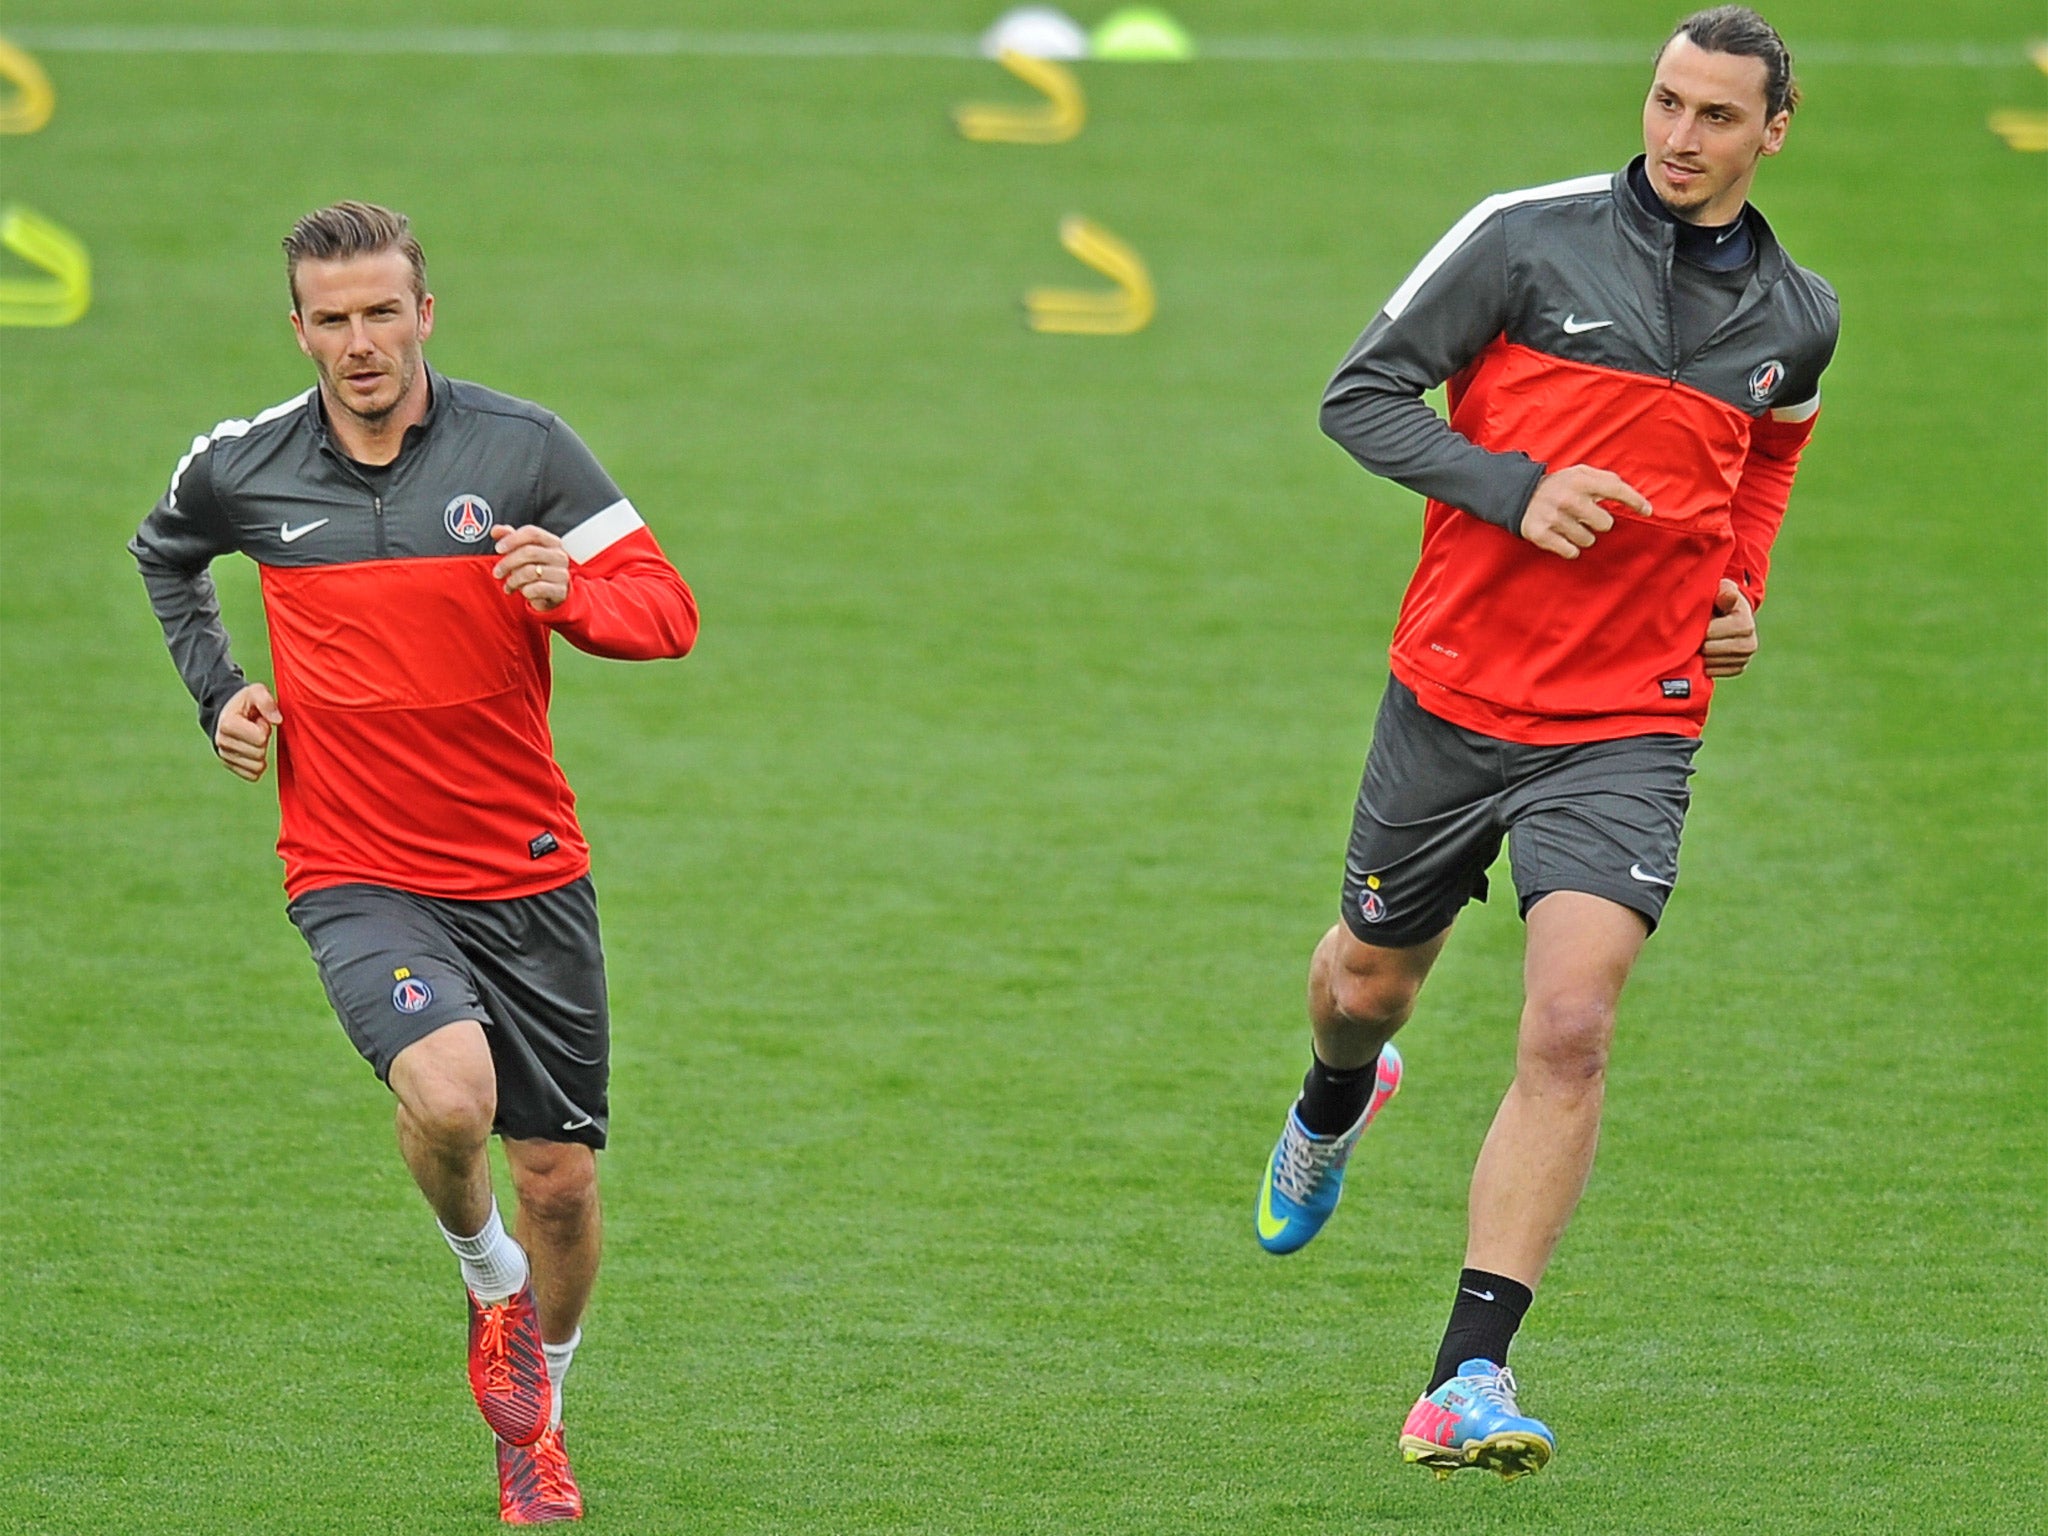 Beckham with PSG's main man, Zlatan Ibrahimovic, during Tuesday's training session